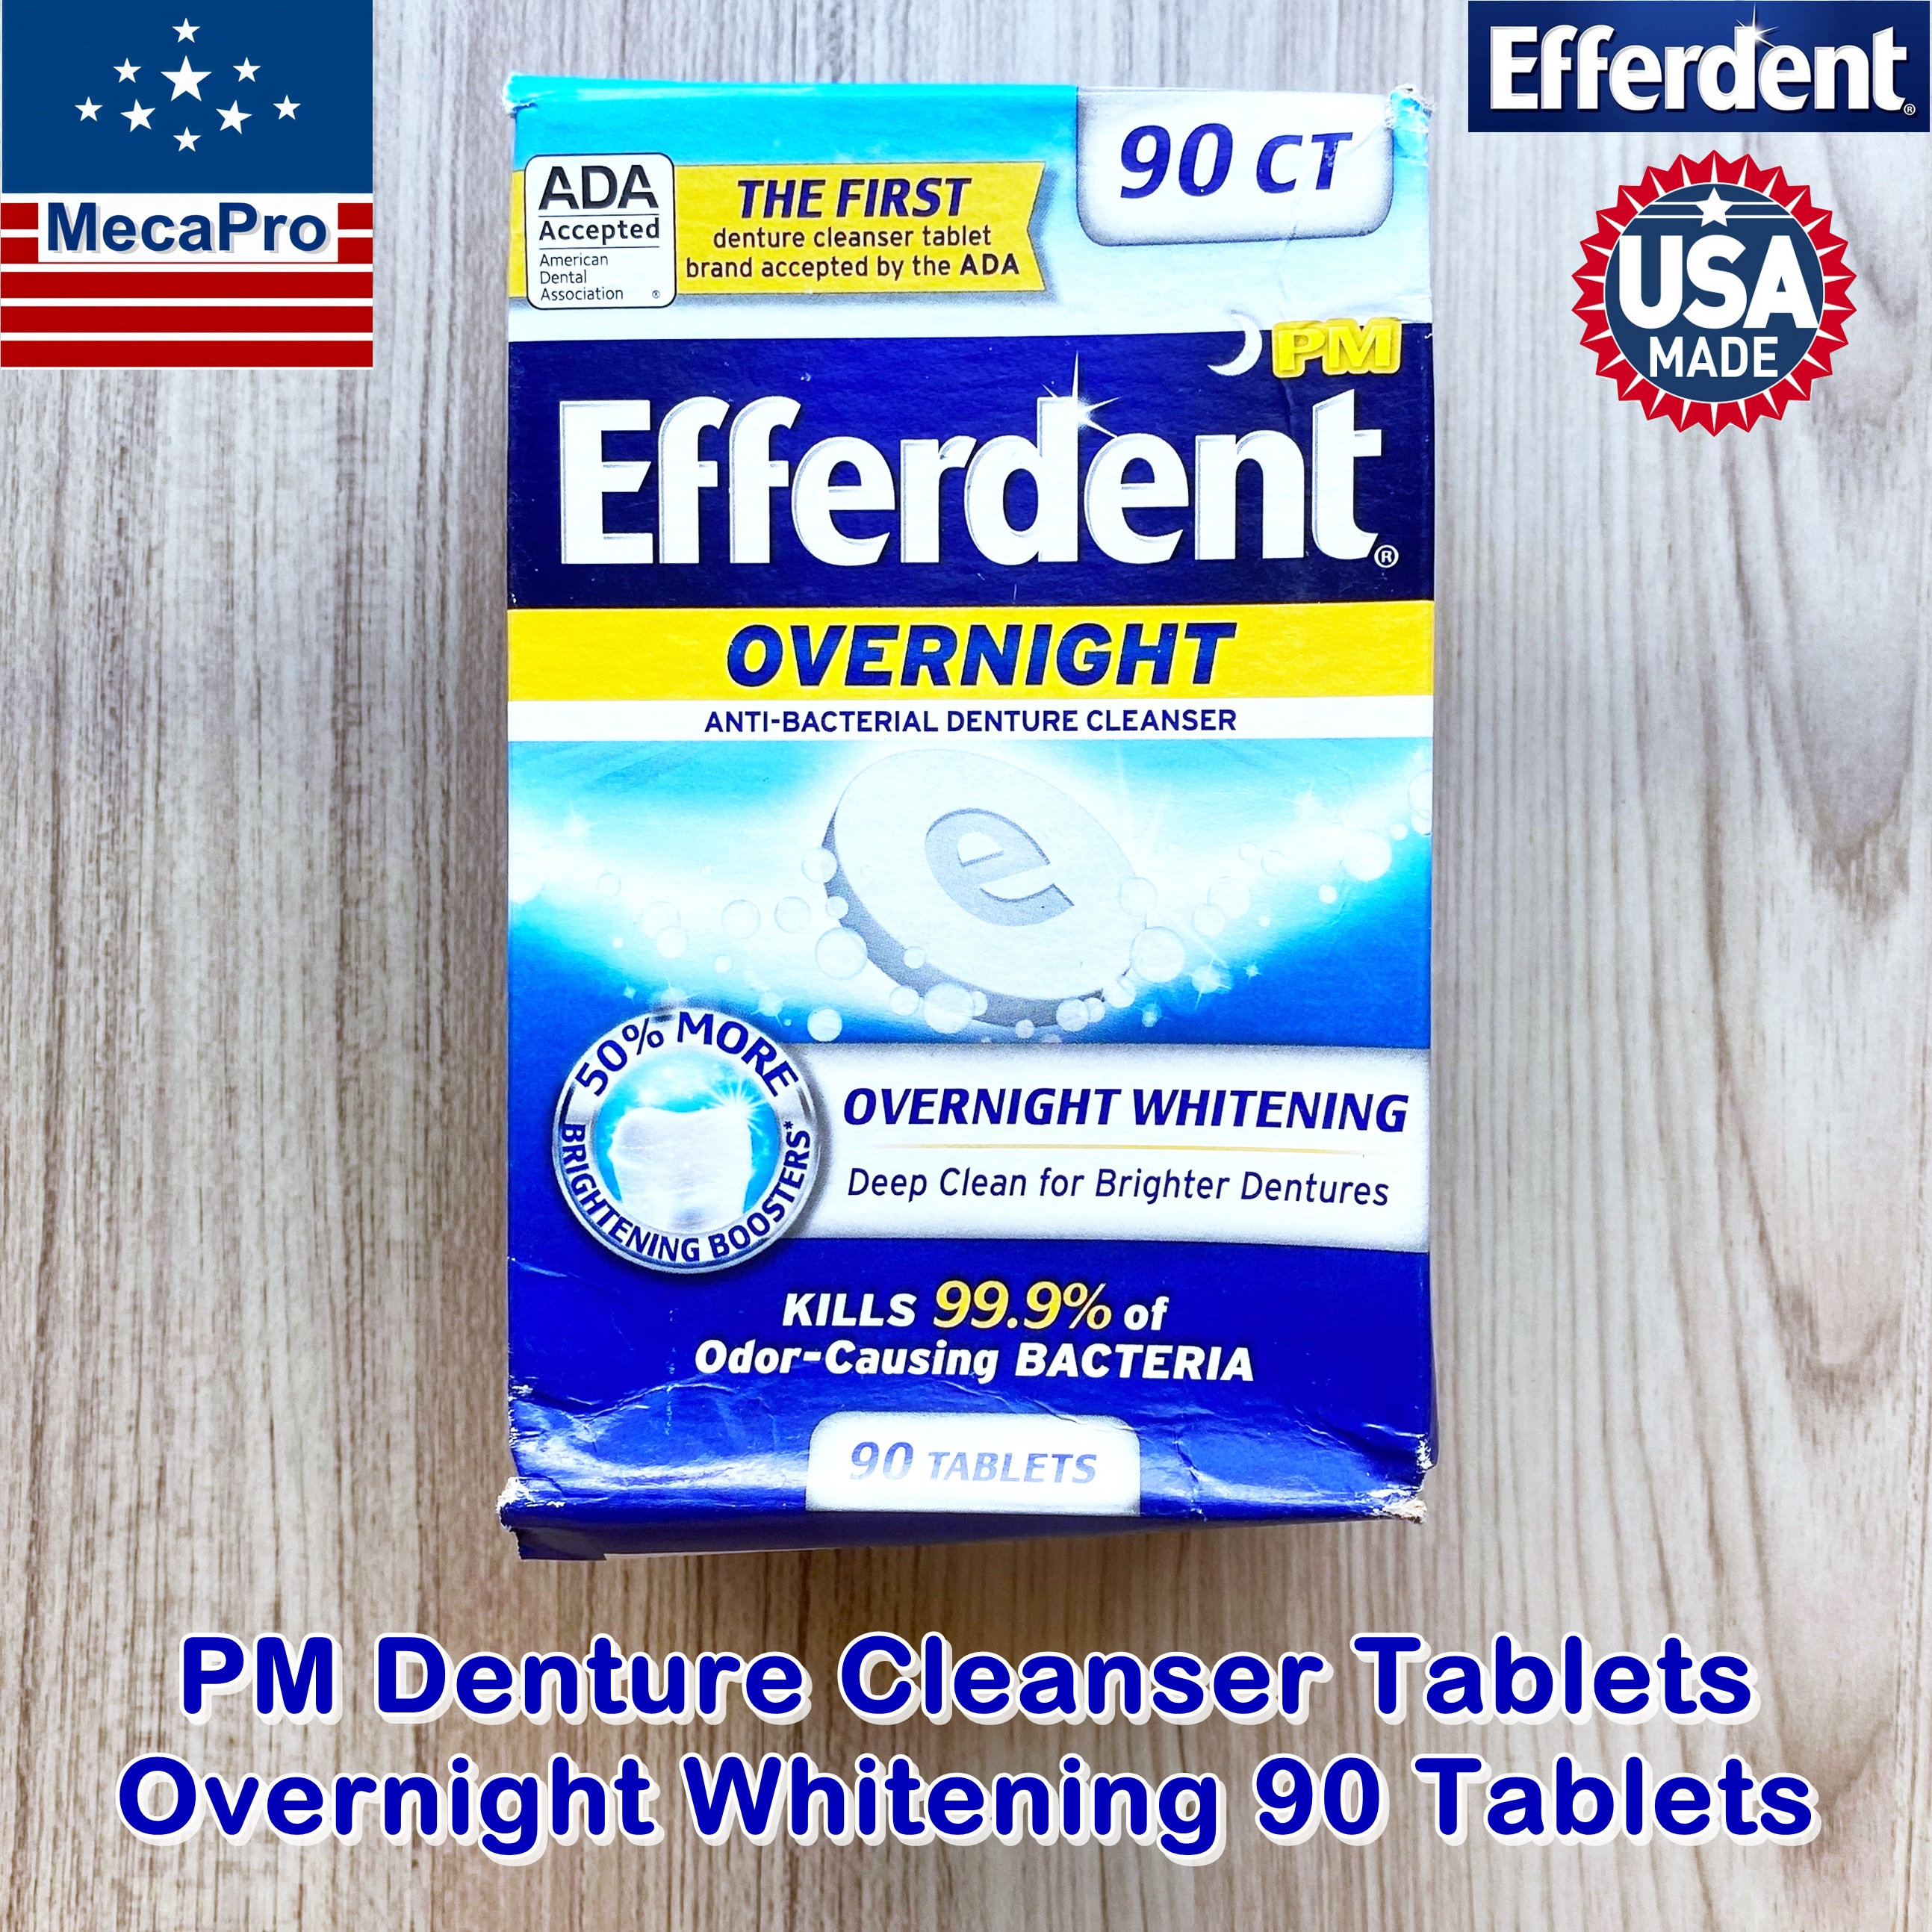 Efferdent® PM Denture Cleanser Tablets Overnight Whitening 90 Tablets เม็ดฟู่ทำความสะอาดฟันปลอม แช่ข้ามคืน